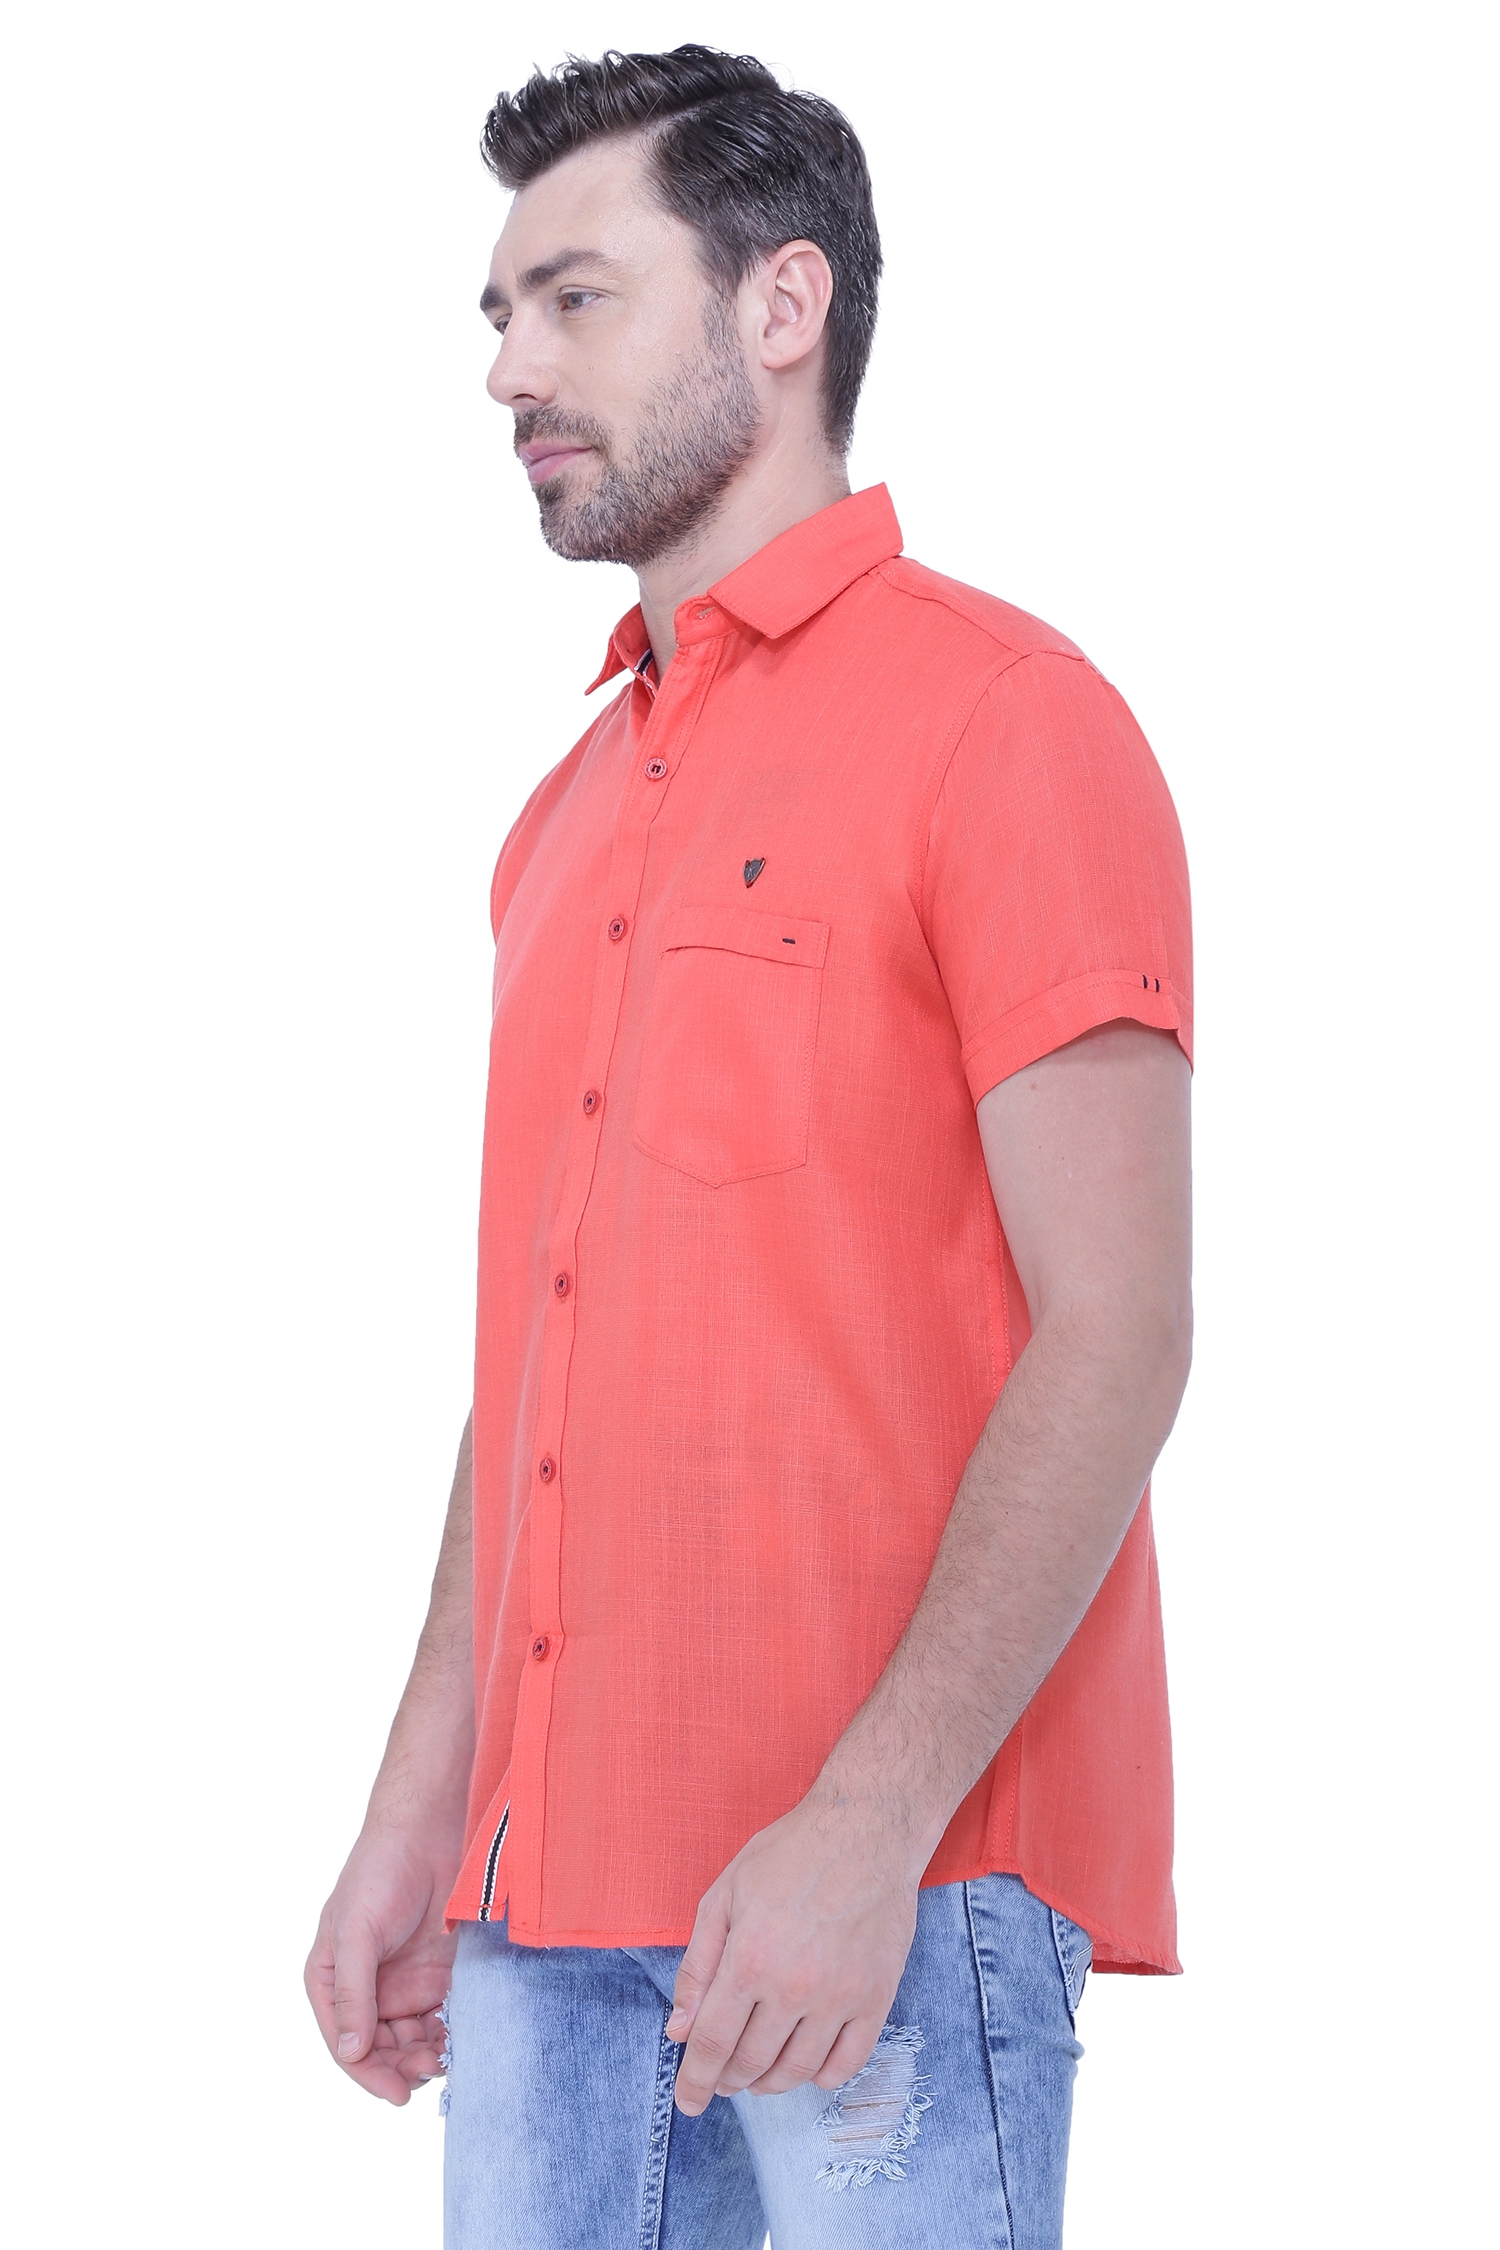 Kuons Avenue | Kuons Avenue Men's Linen Blend Half Sleeves Casual Shirt-KACLHS1233 1